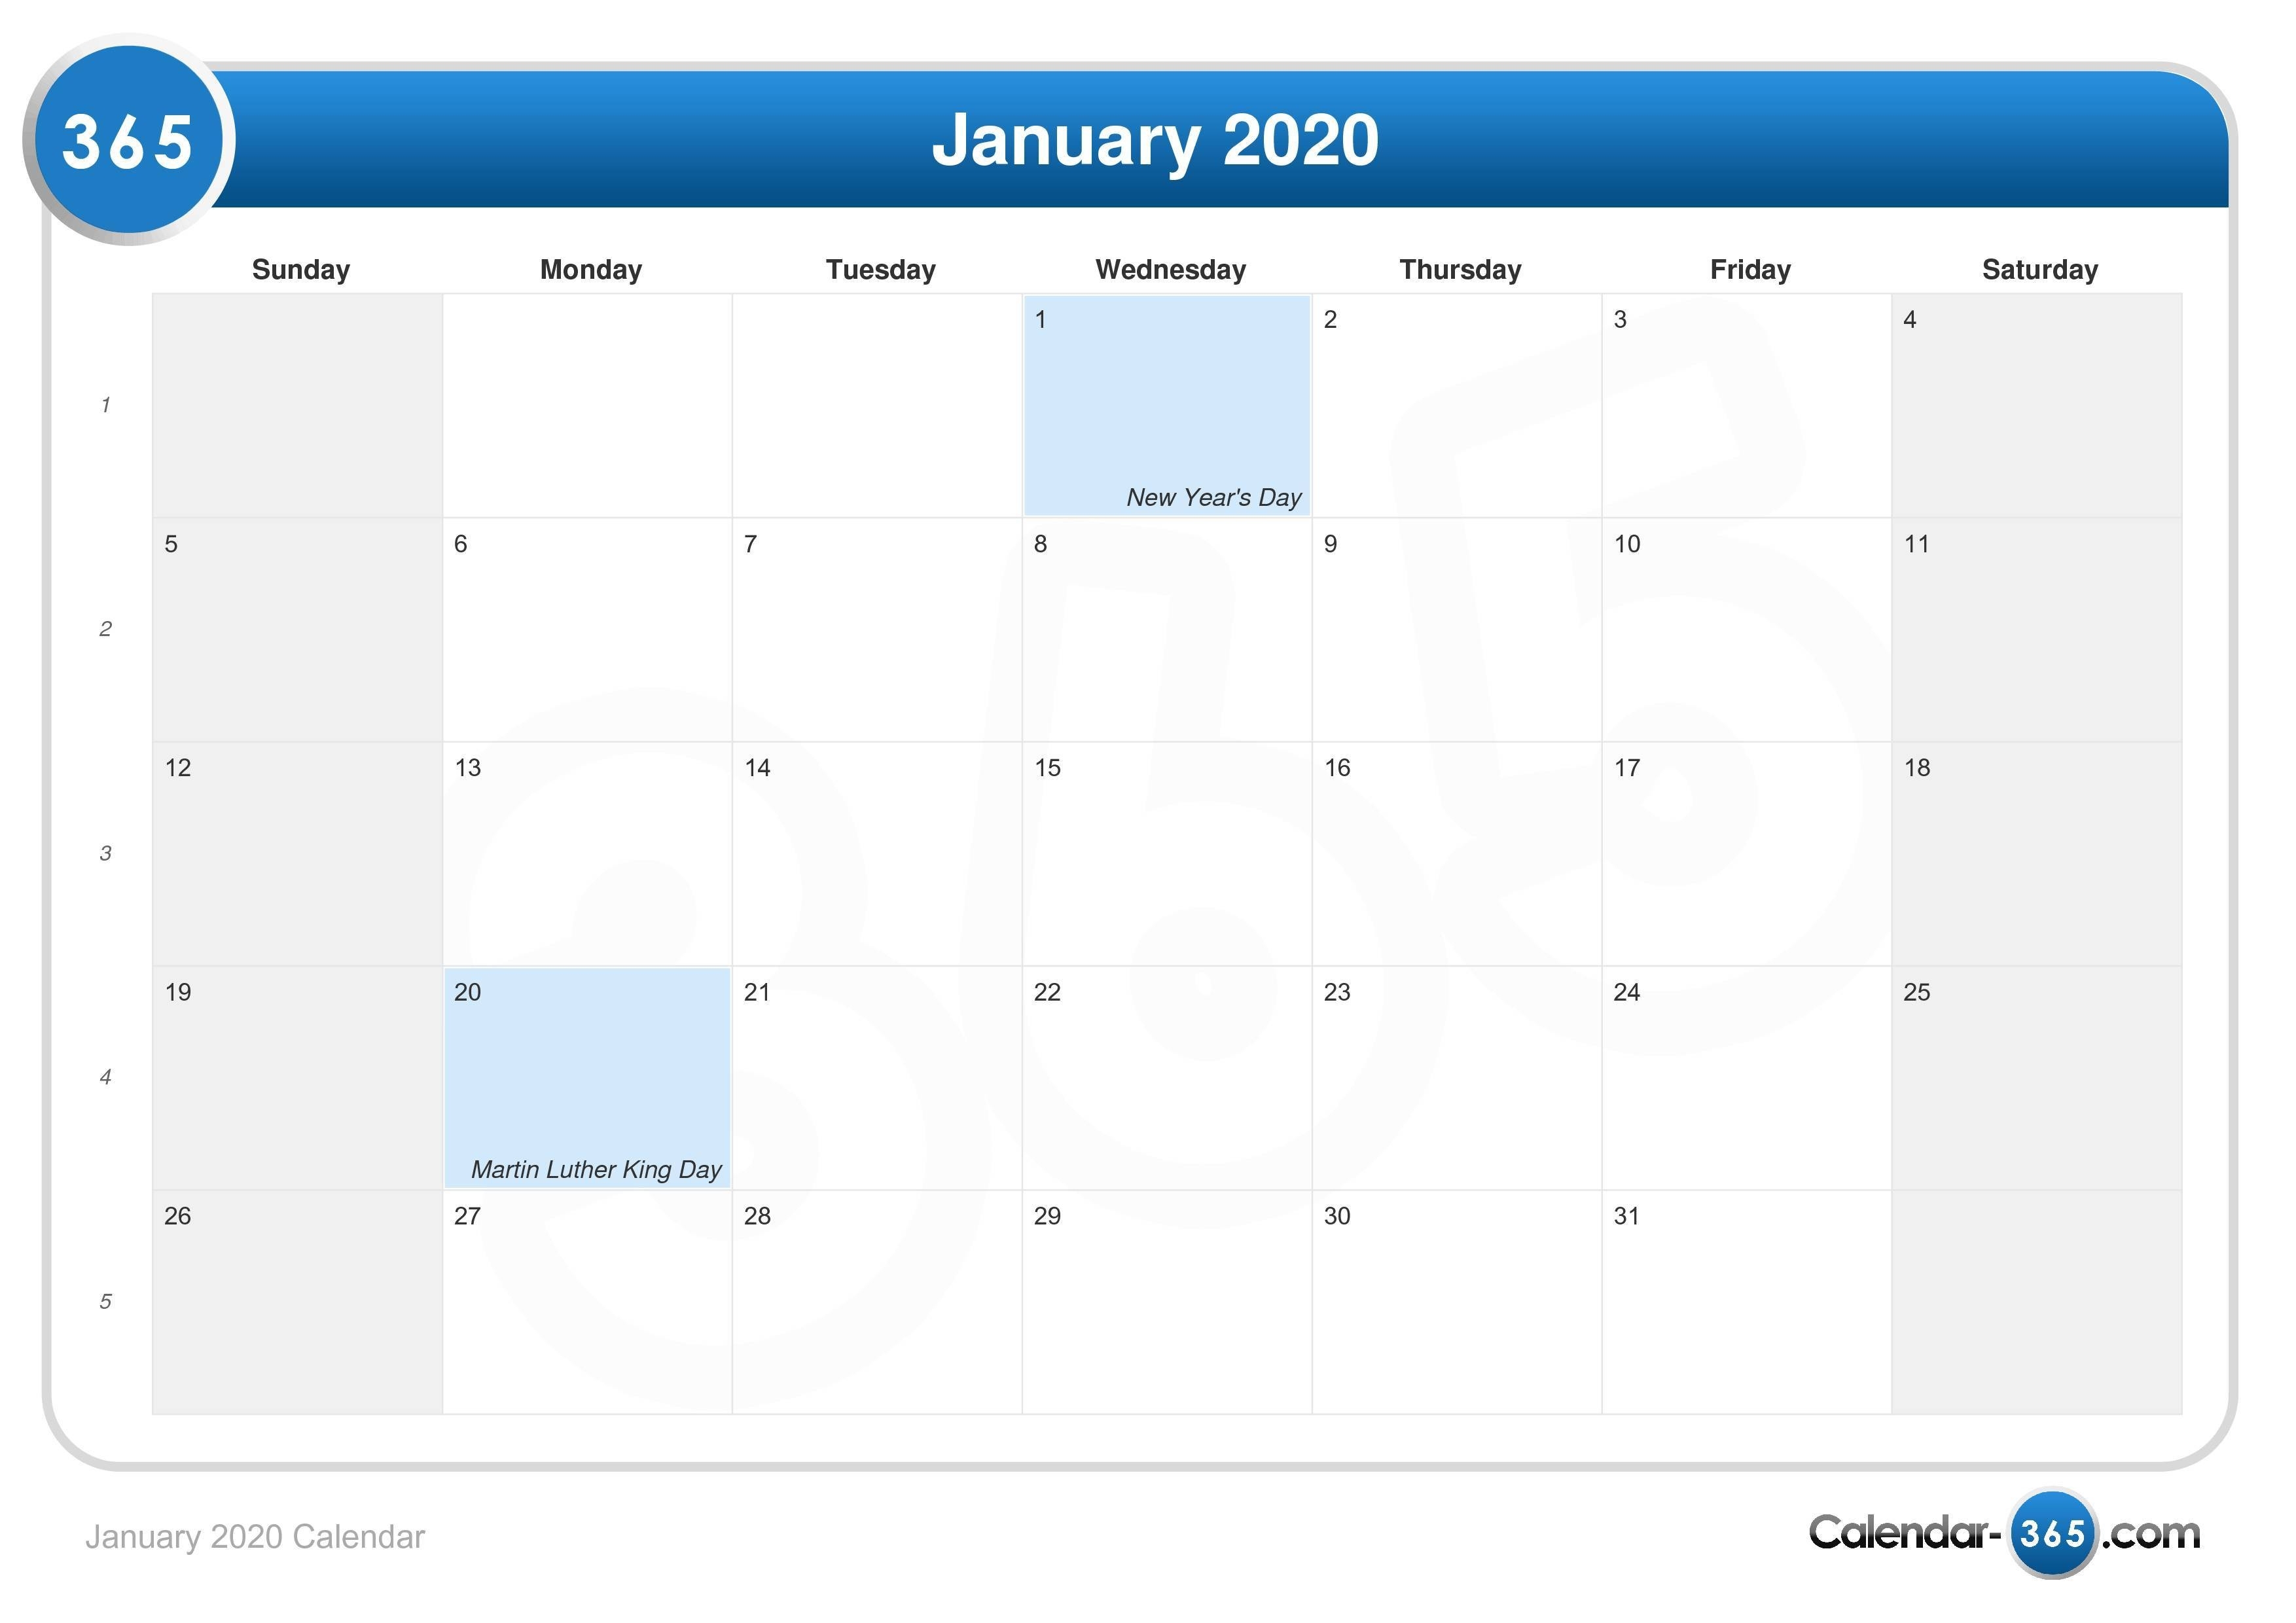 January 2020 Calendar-Las Vegas Event Calendar January 2020